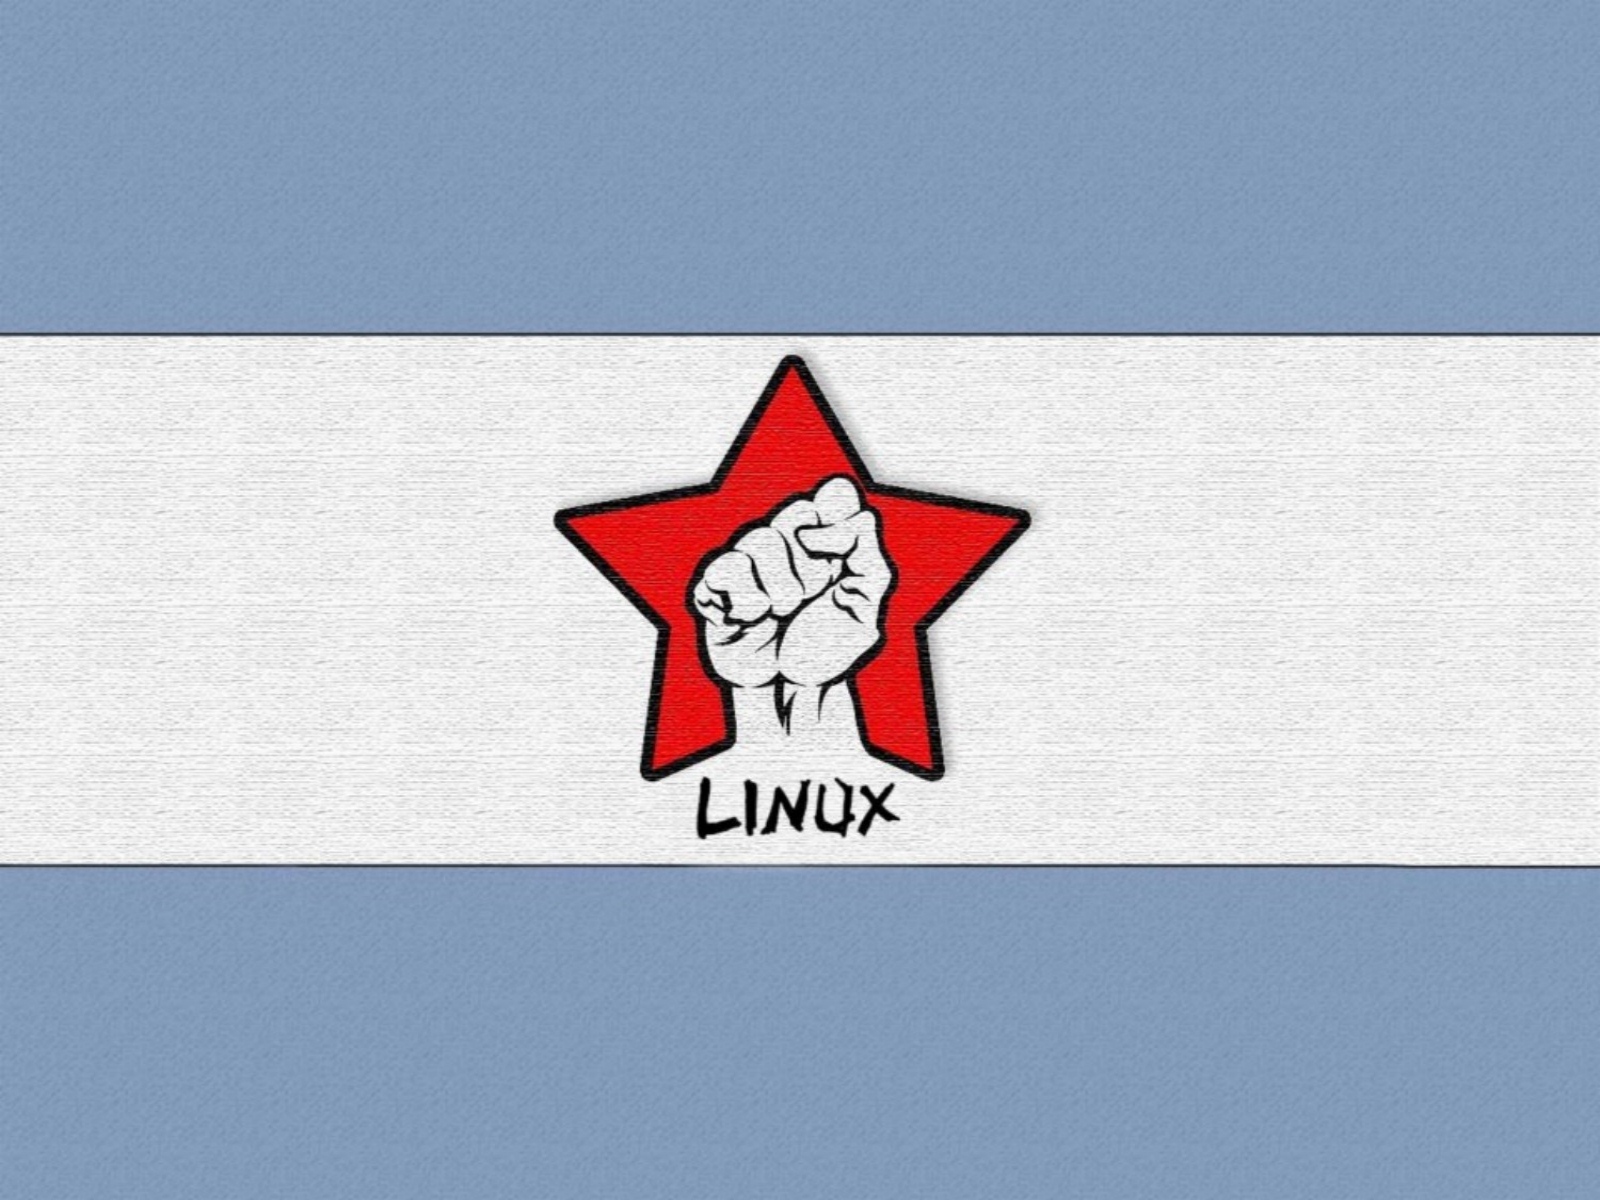 Socialist Wallpaper Linux Fist